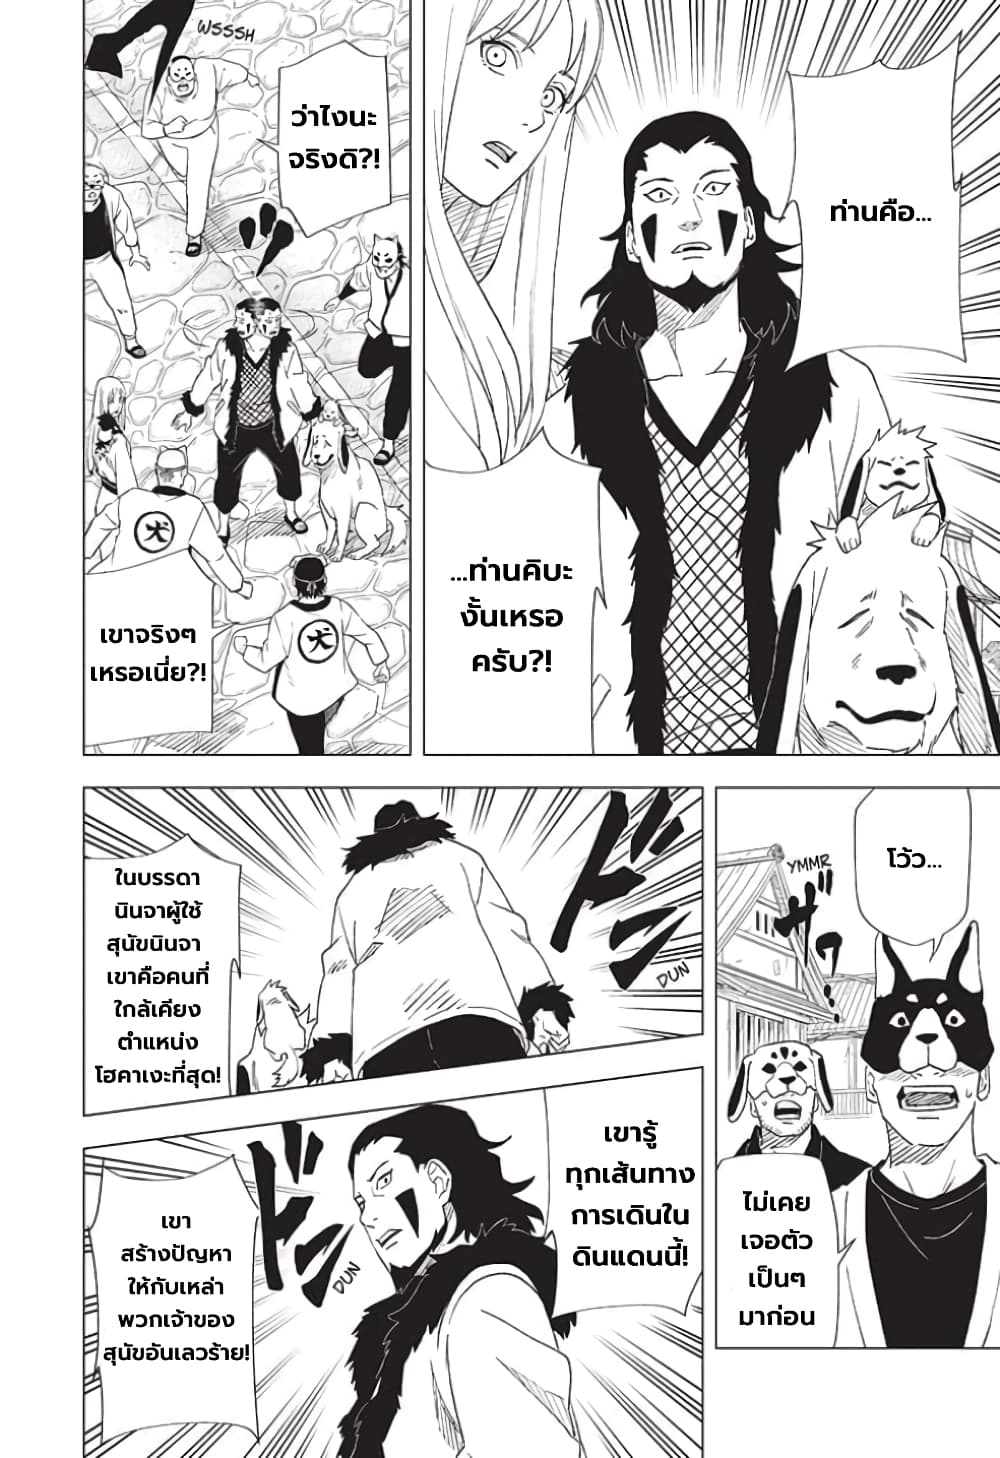 Naruto Konoha’s Story – The Steam Ninja Scrolls The Manga ตอนที่ 5 (4)